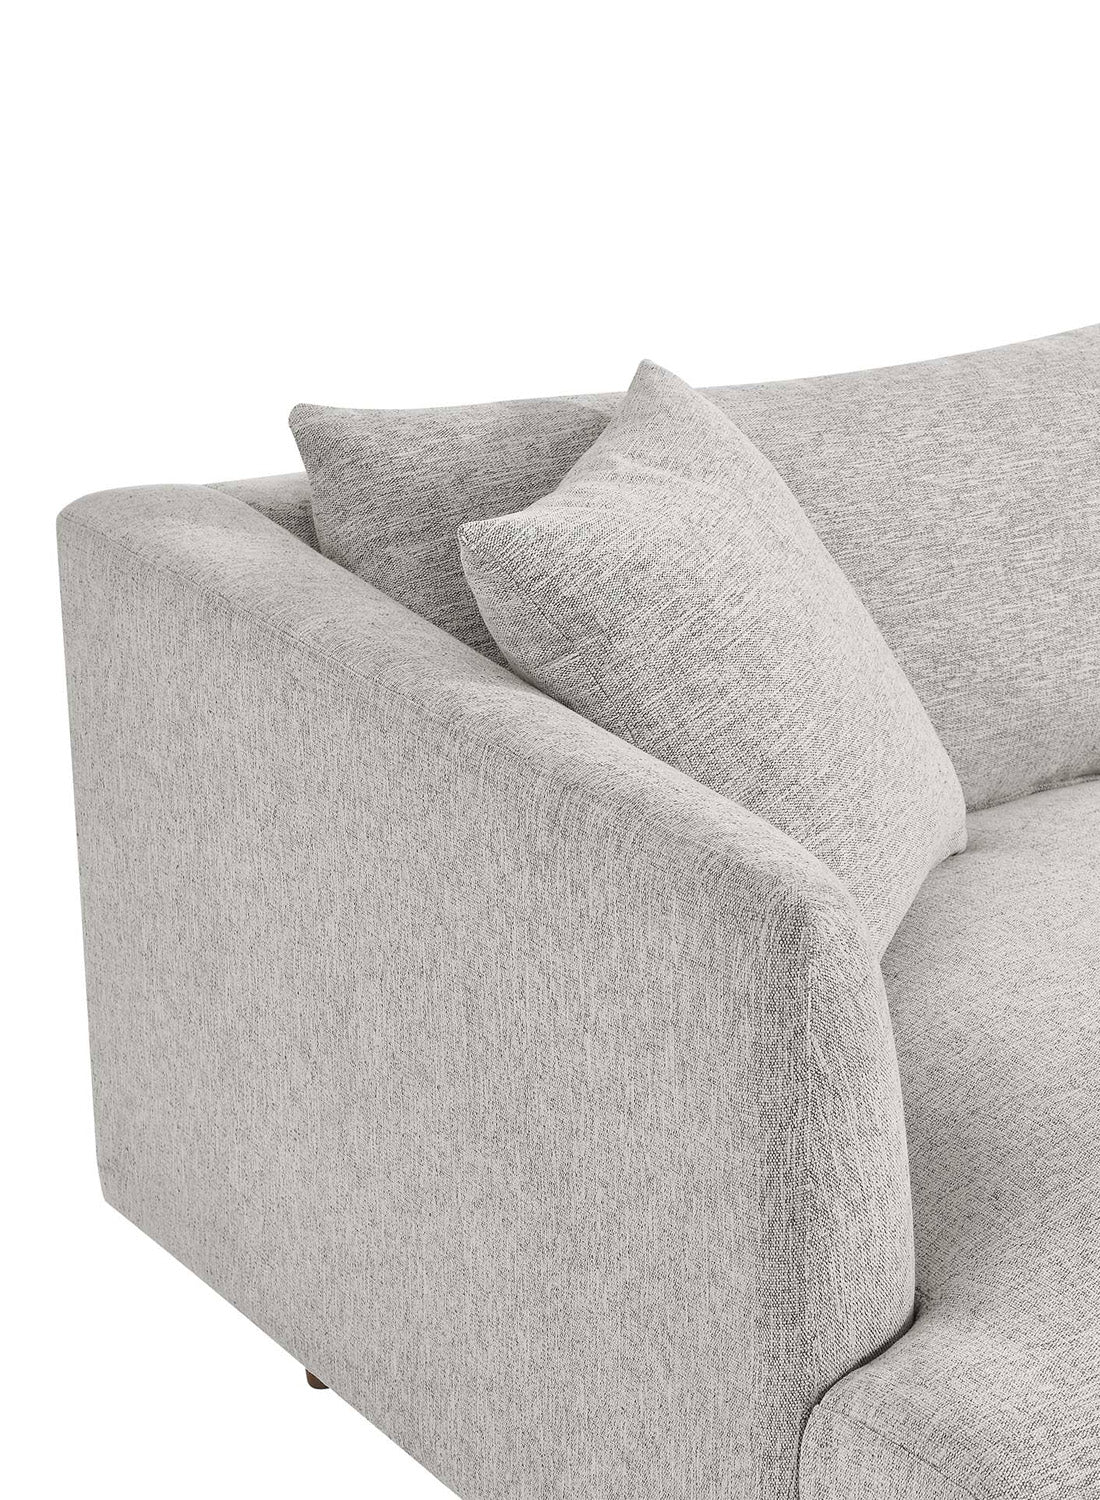 Luxton Sofa, light gray